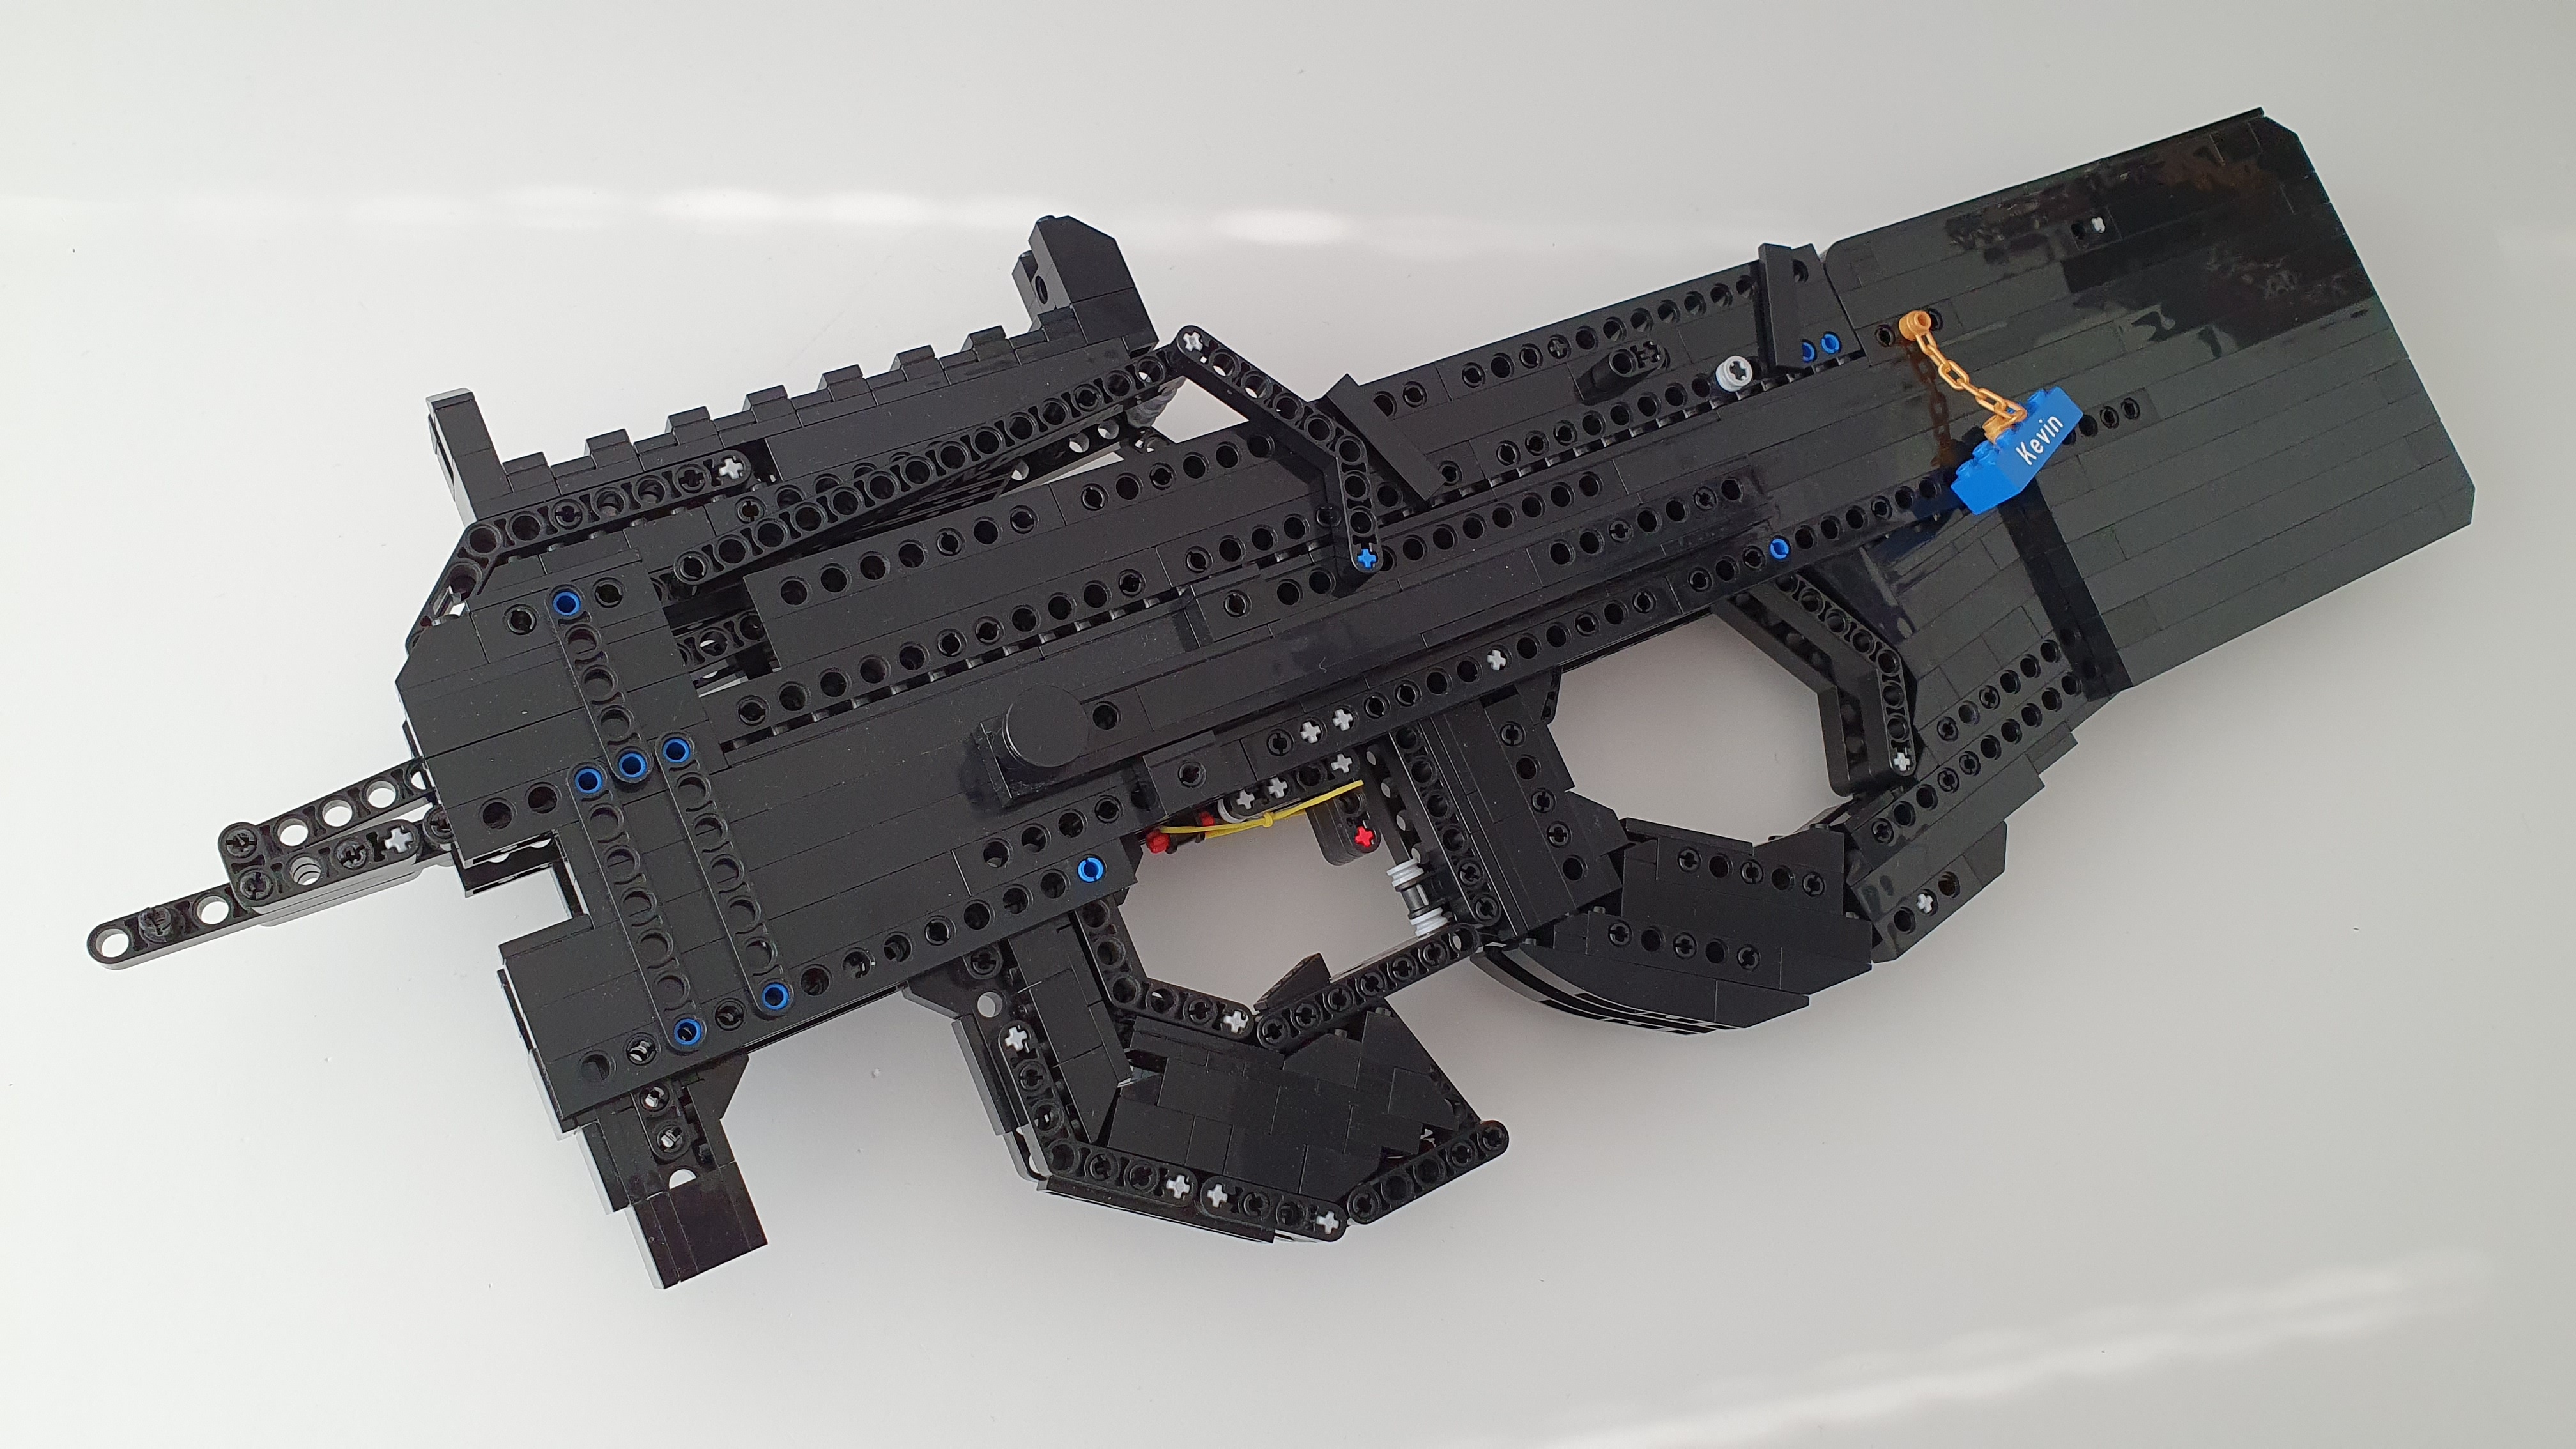 Lego Technics Compatible, Rubber Lego Rubber Bands